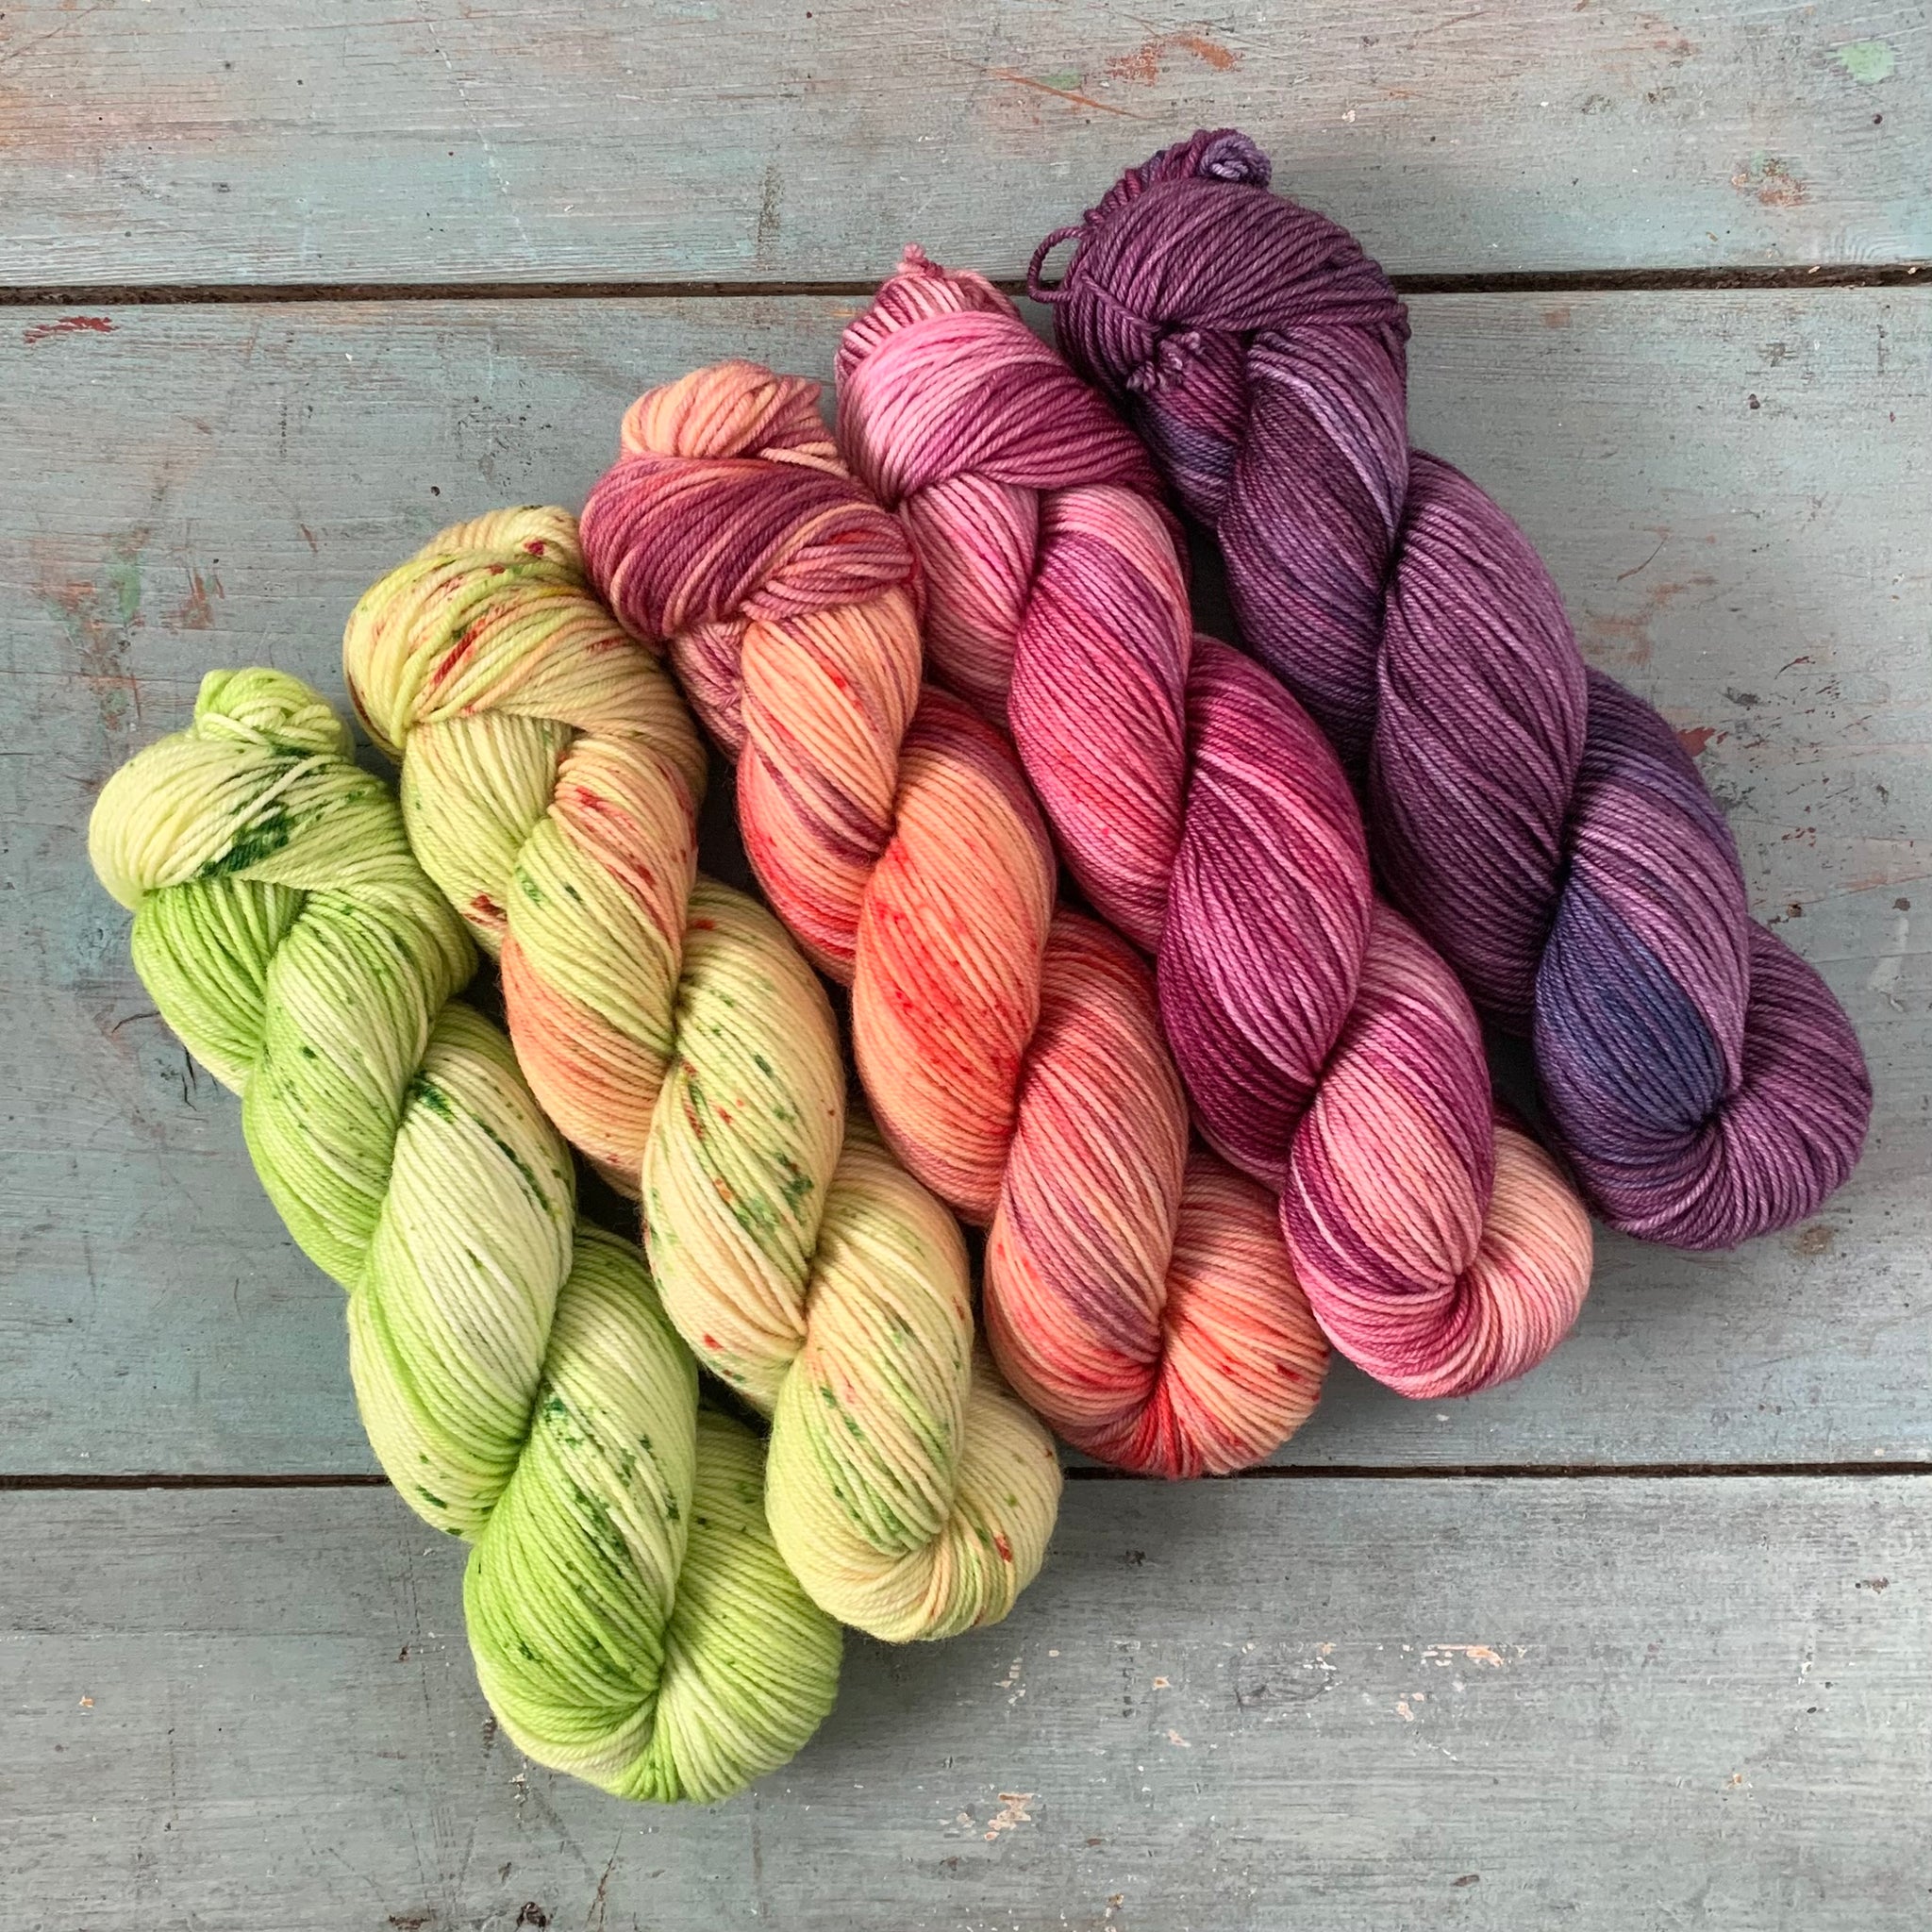 Yarn Love Yarns - Whimsical-Coloured Hand-dyed Yarns - Toronto